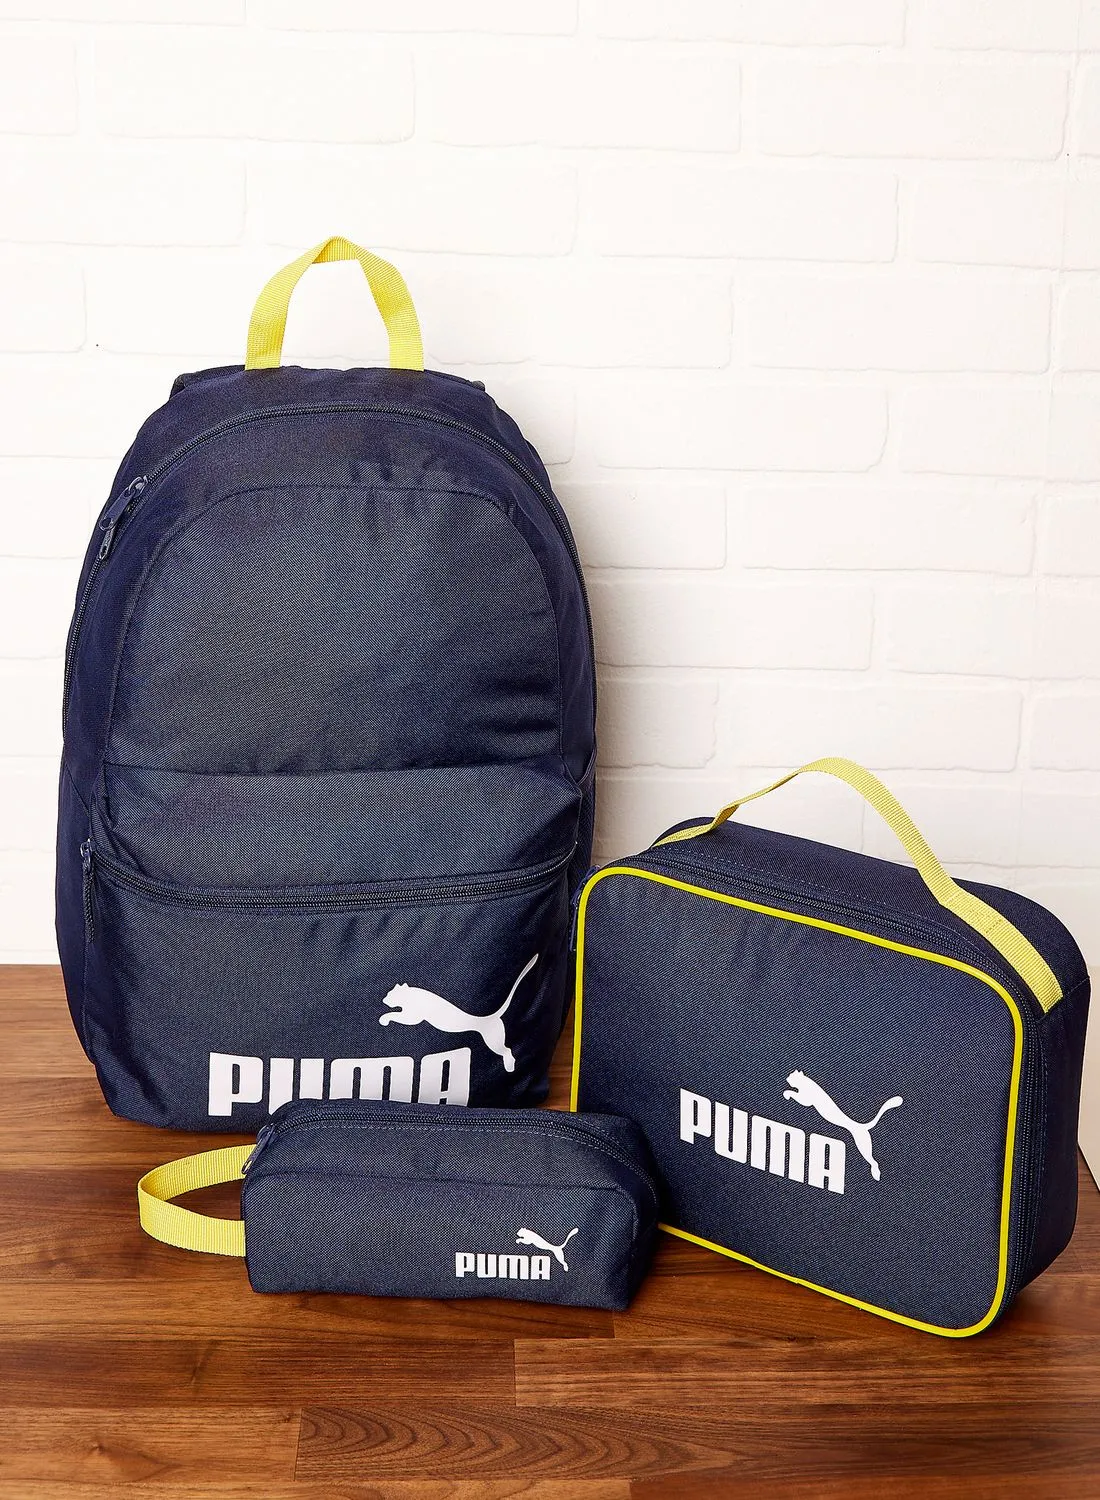 PUMA Bts Lunch Bag And Backpack Set